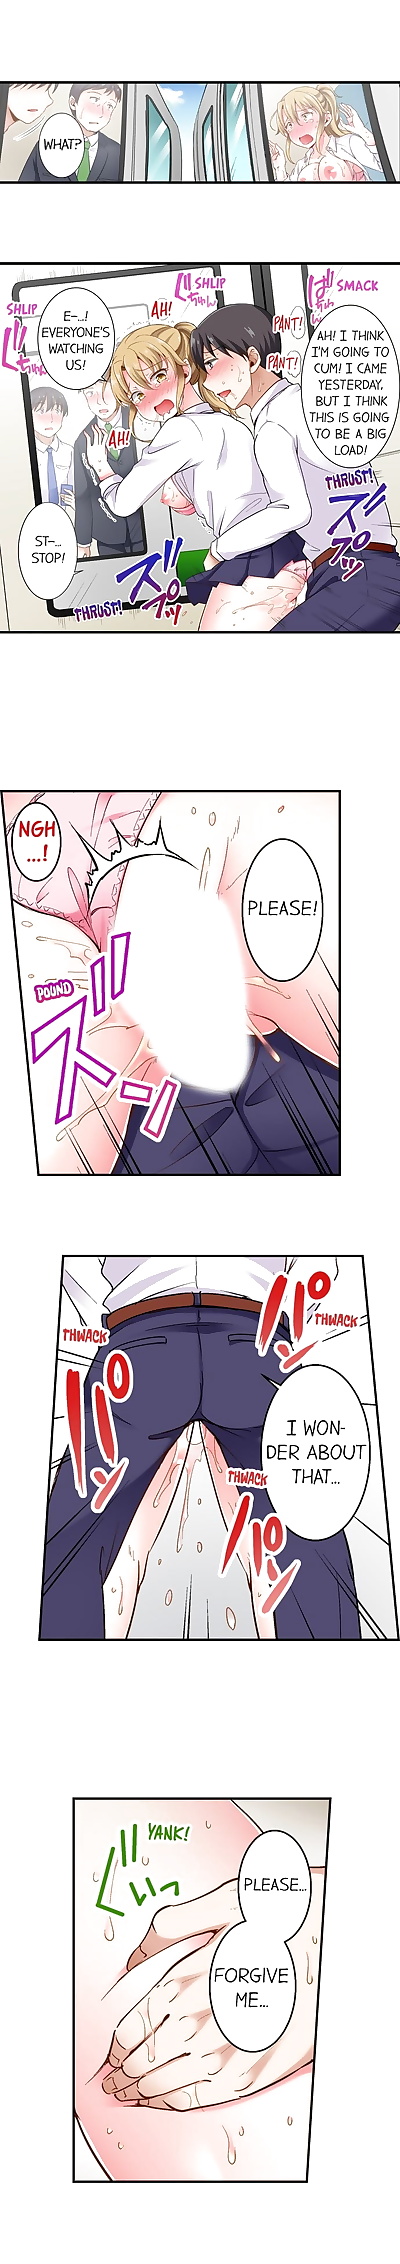 engelse manga De lvl 99 dick - Onderdeel 2, big breasts , full color 